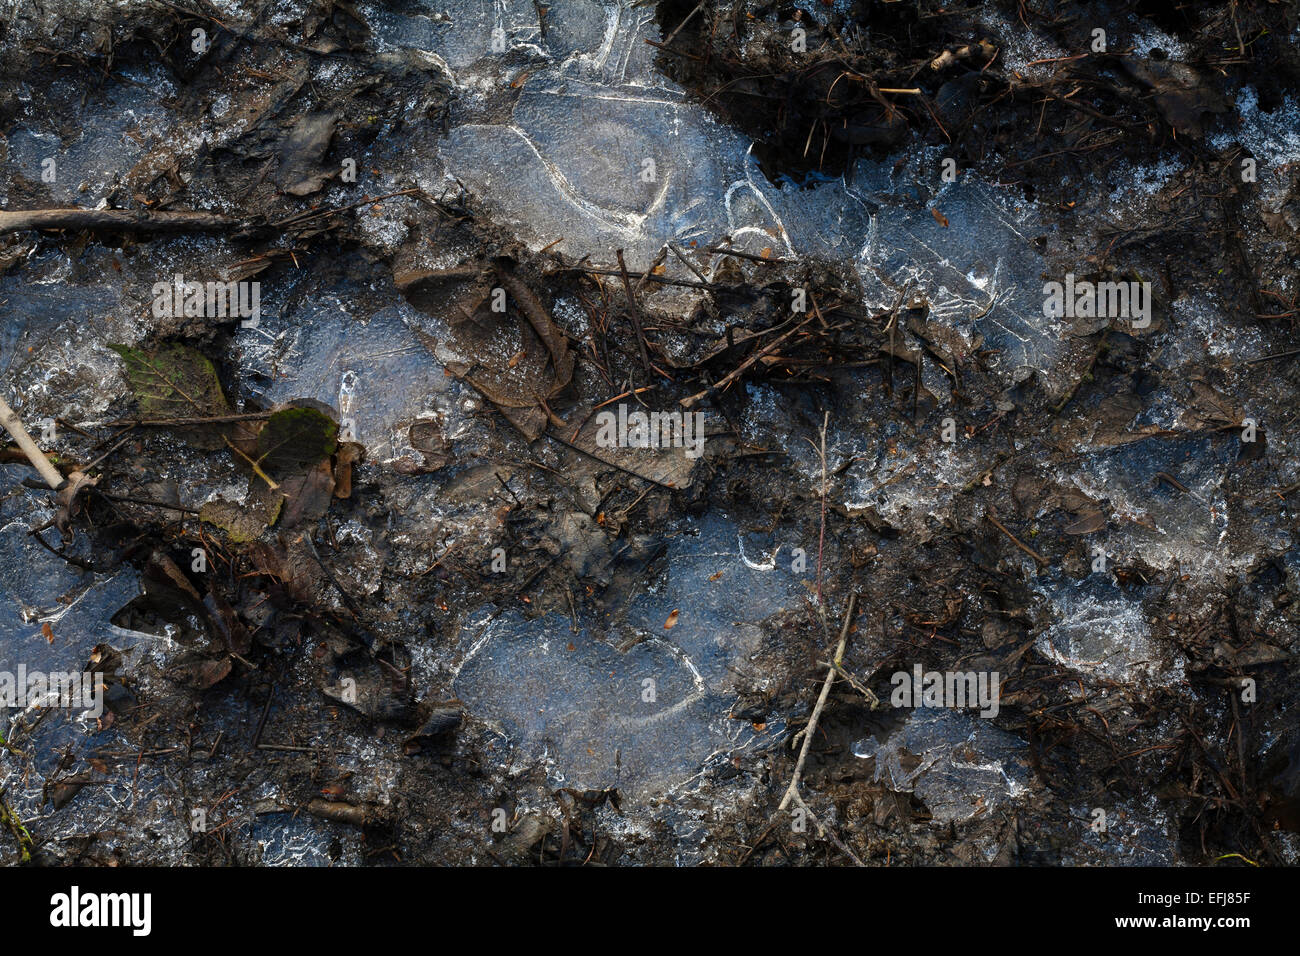 Frozen footprints in the wet mud. Stock Photo